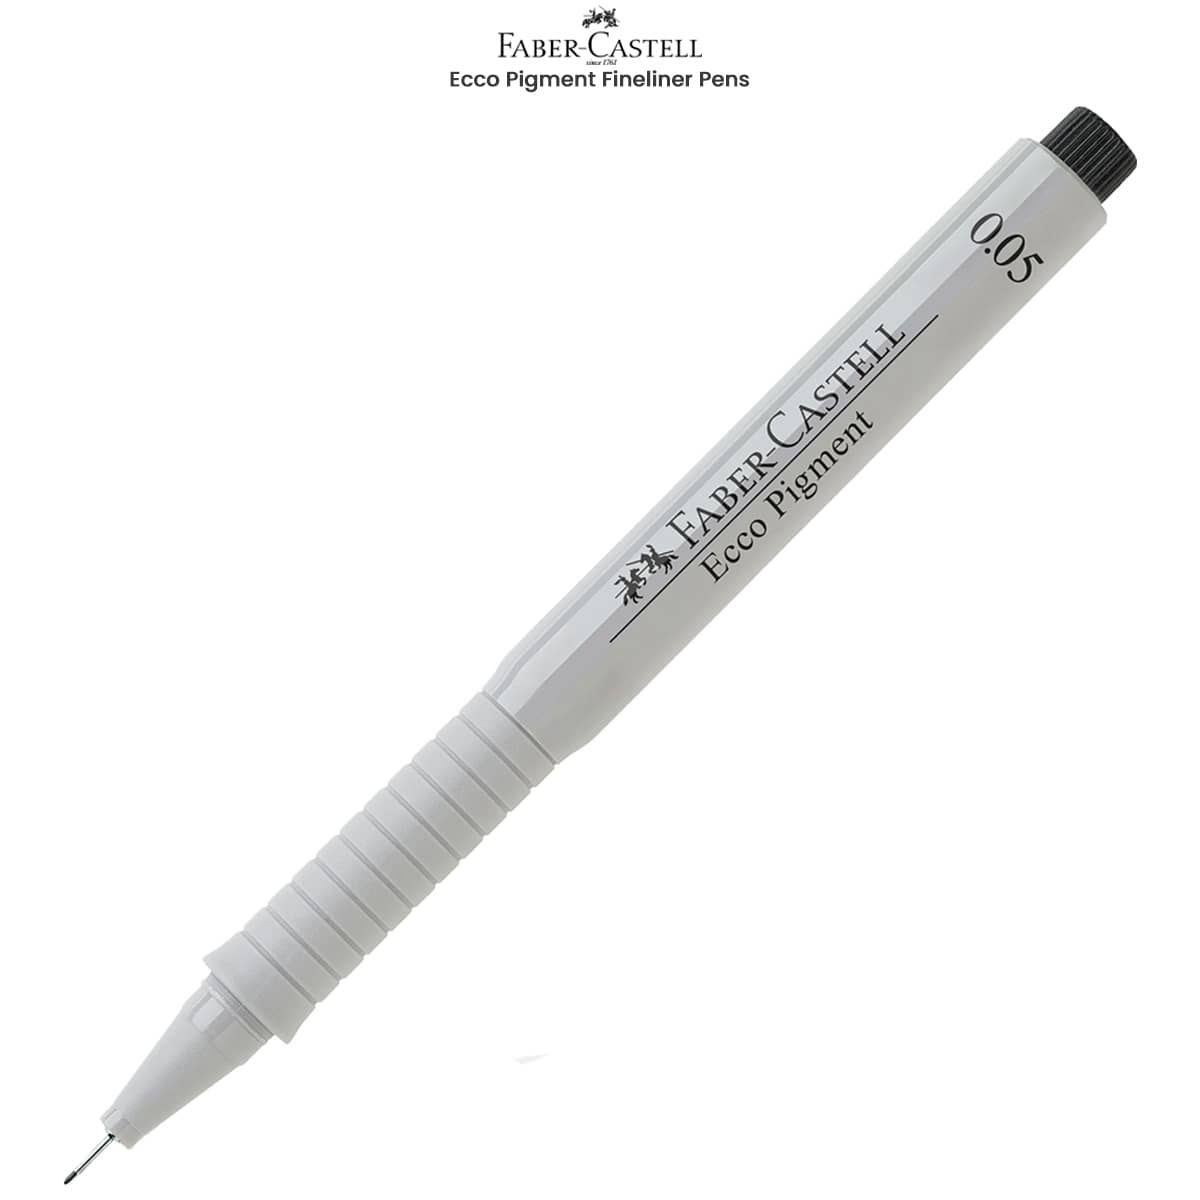 https://www.jerrysartarama.com/media/catalog/product/cache/ecb49a32eeb5603594b082bd5fe65733/f/a/faber-castell-ecco-pigment-fineliner-pens-main.jpg